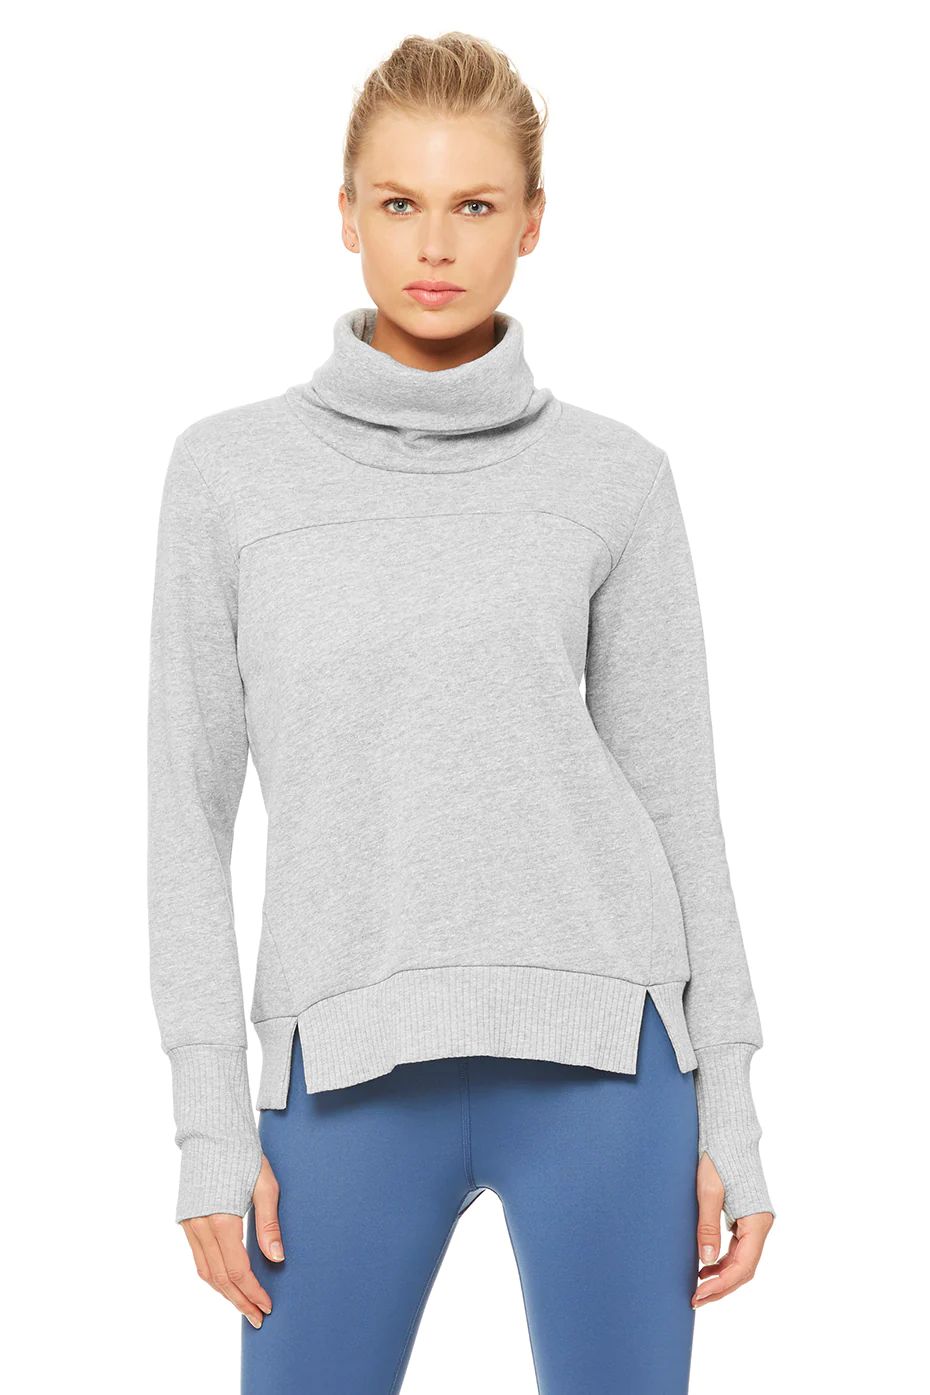 Alo Yoga Haze Long Sleeve Top - Dove Grey Heather - Size XS - Triblend Fleece / 5x3 Rib | Alo Yoga